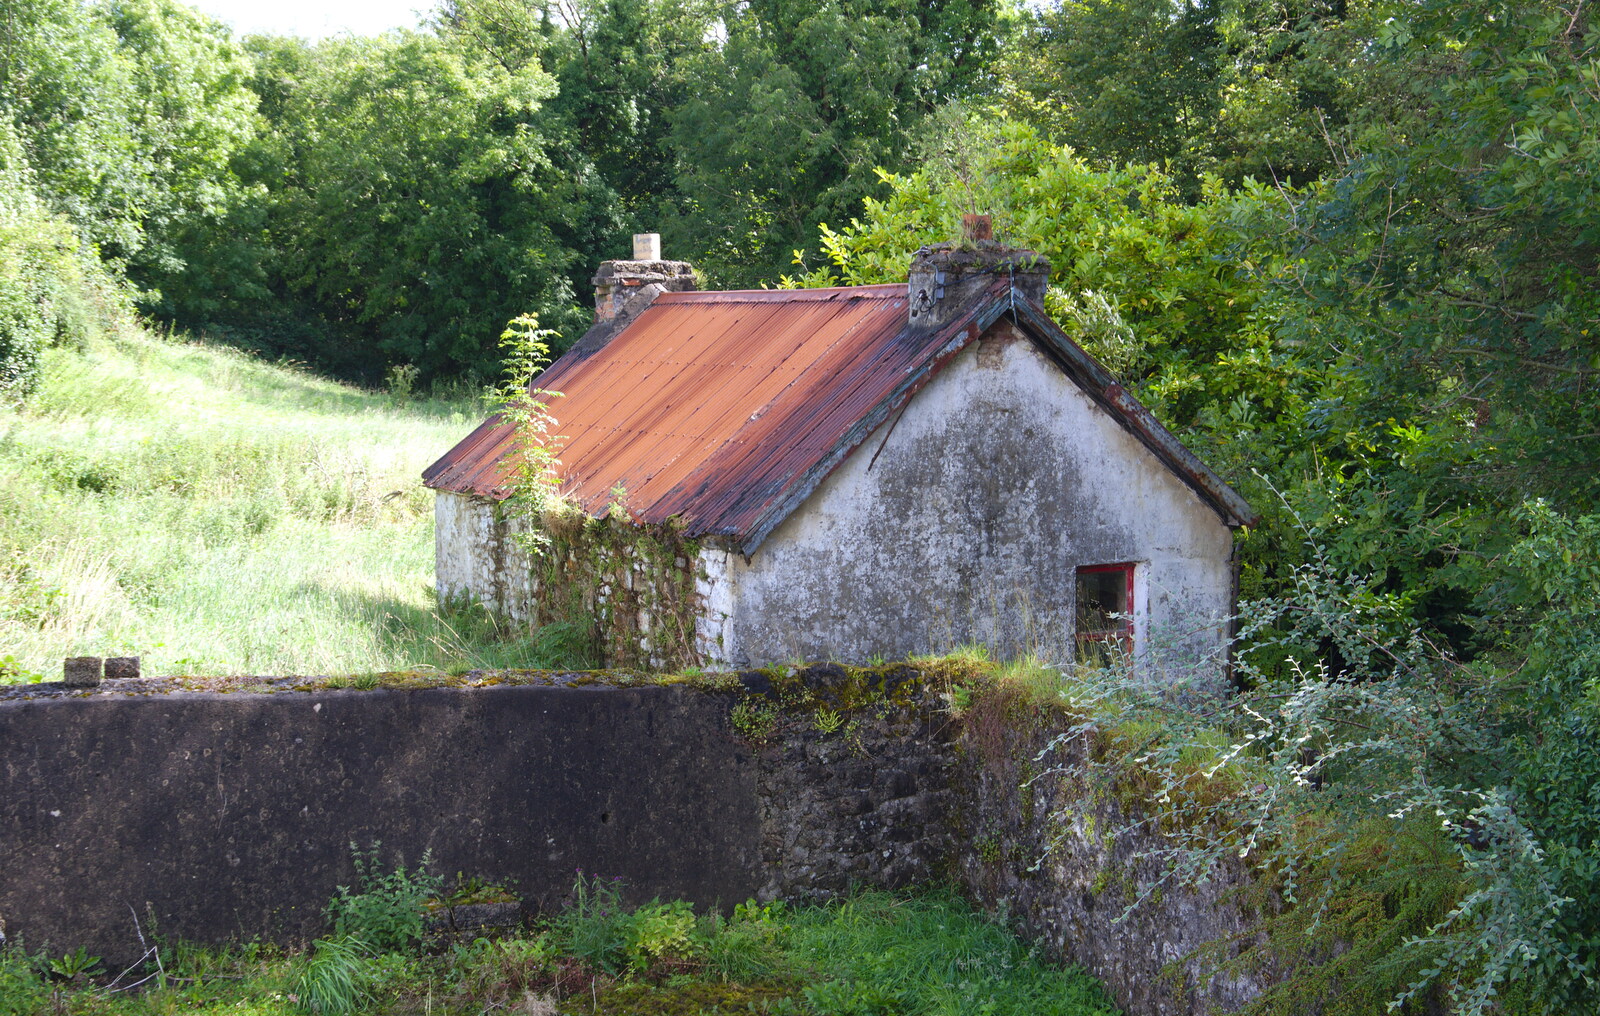 A derelict house on Owenbeg River, Castle Street from Open Mic Night, Bía Sláinte, Manorhamilton, Ireland - 17th August 2019